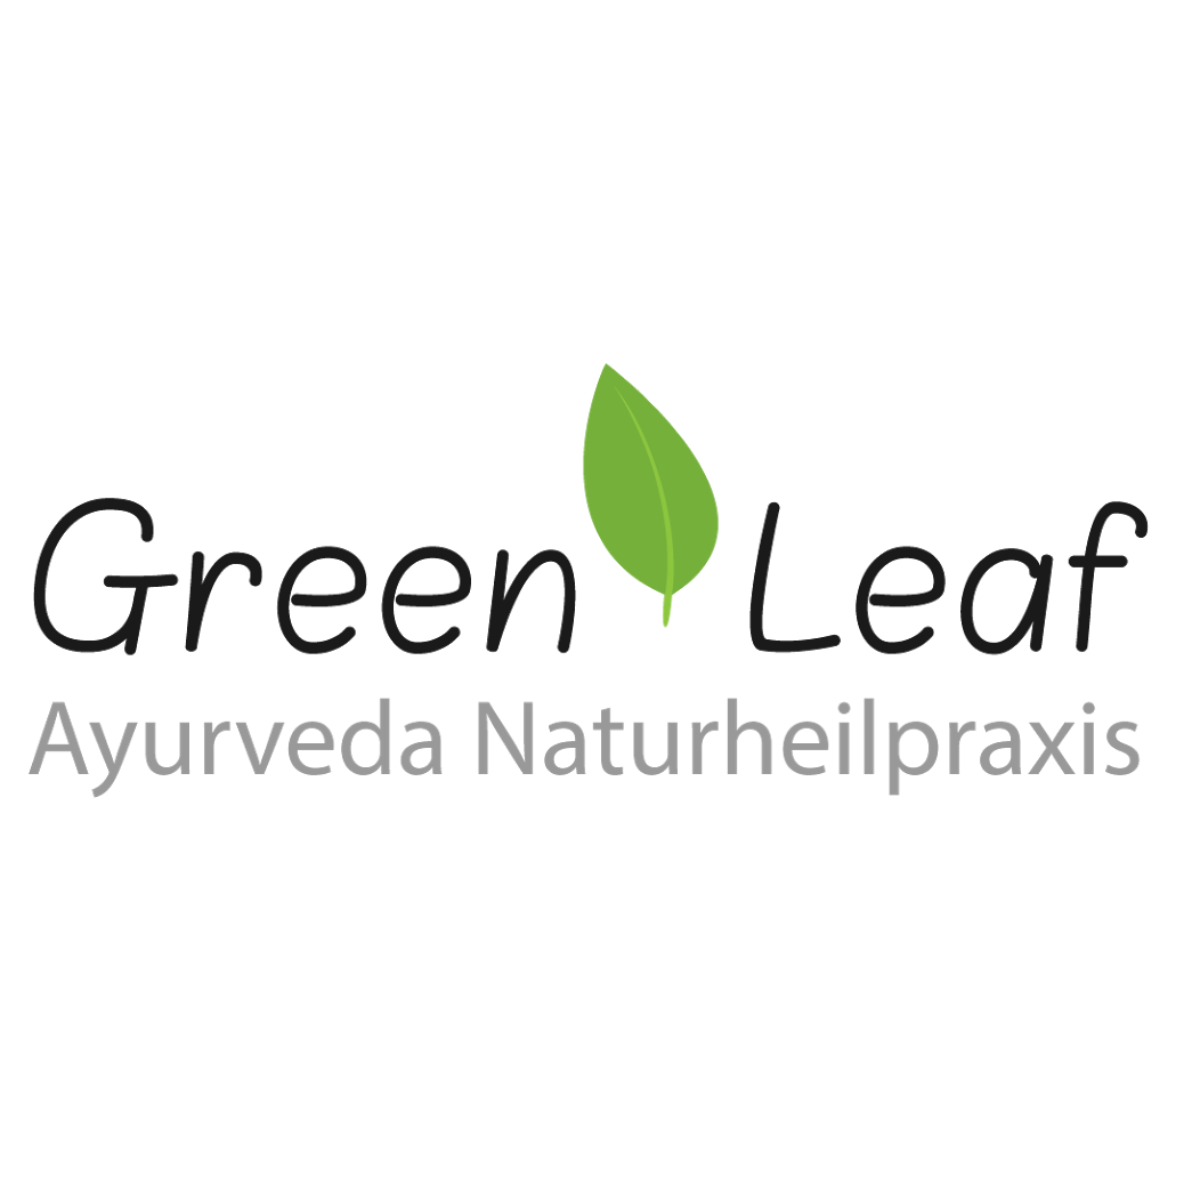 Pharmacy logo medical symbols pure ayurveda logo natural logo wall mural •  murals eco, ayurveda, environment | myloview.com